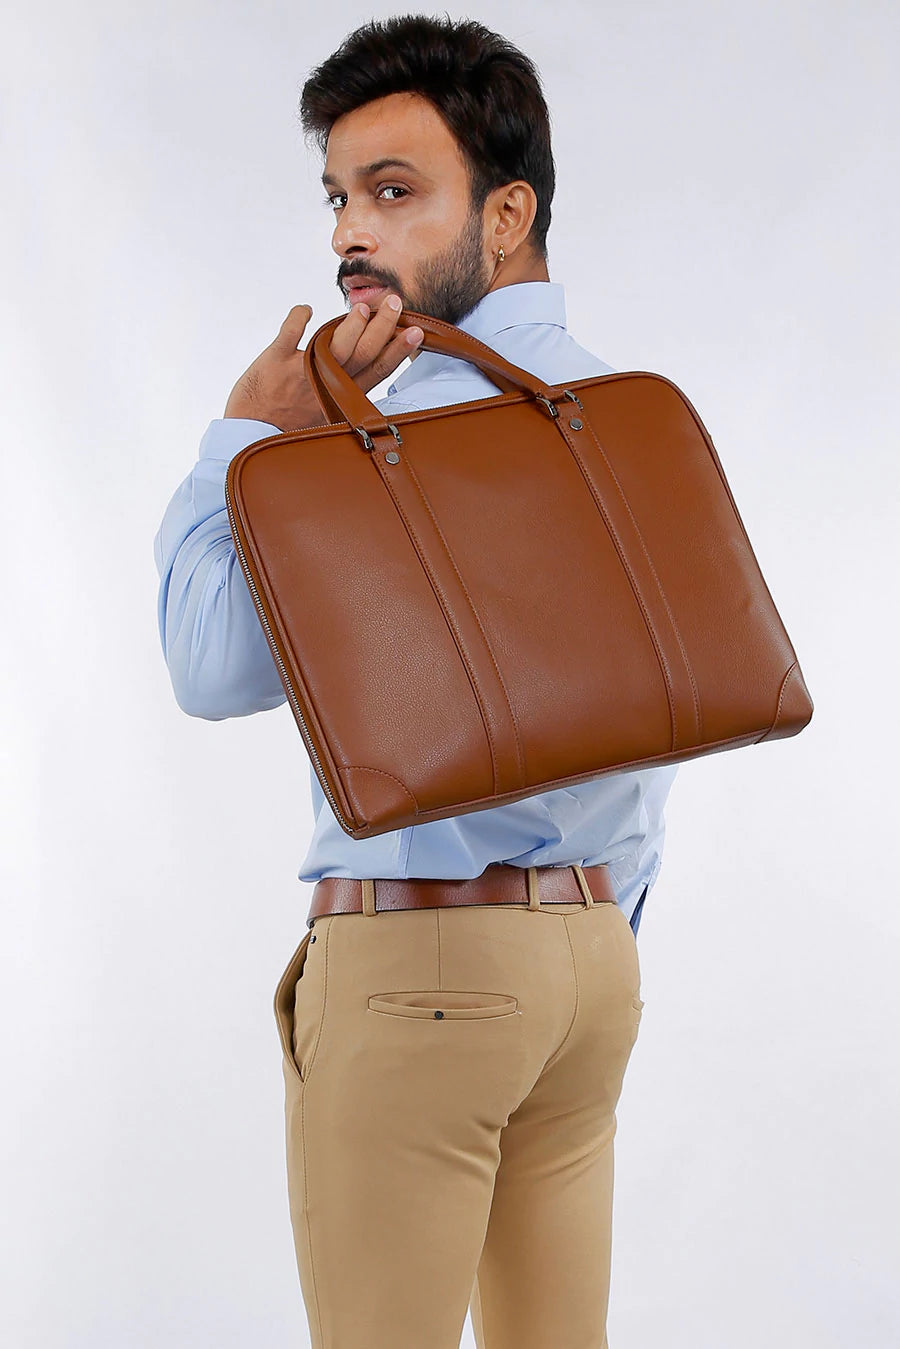 John 15 Inch Vegan Leather Laptop Bag for Men